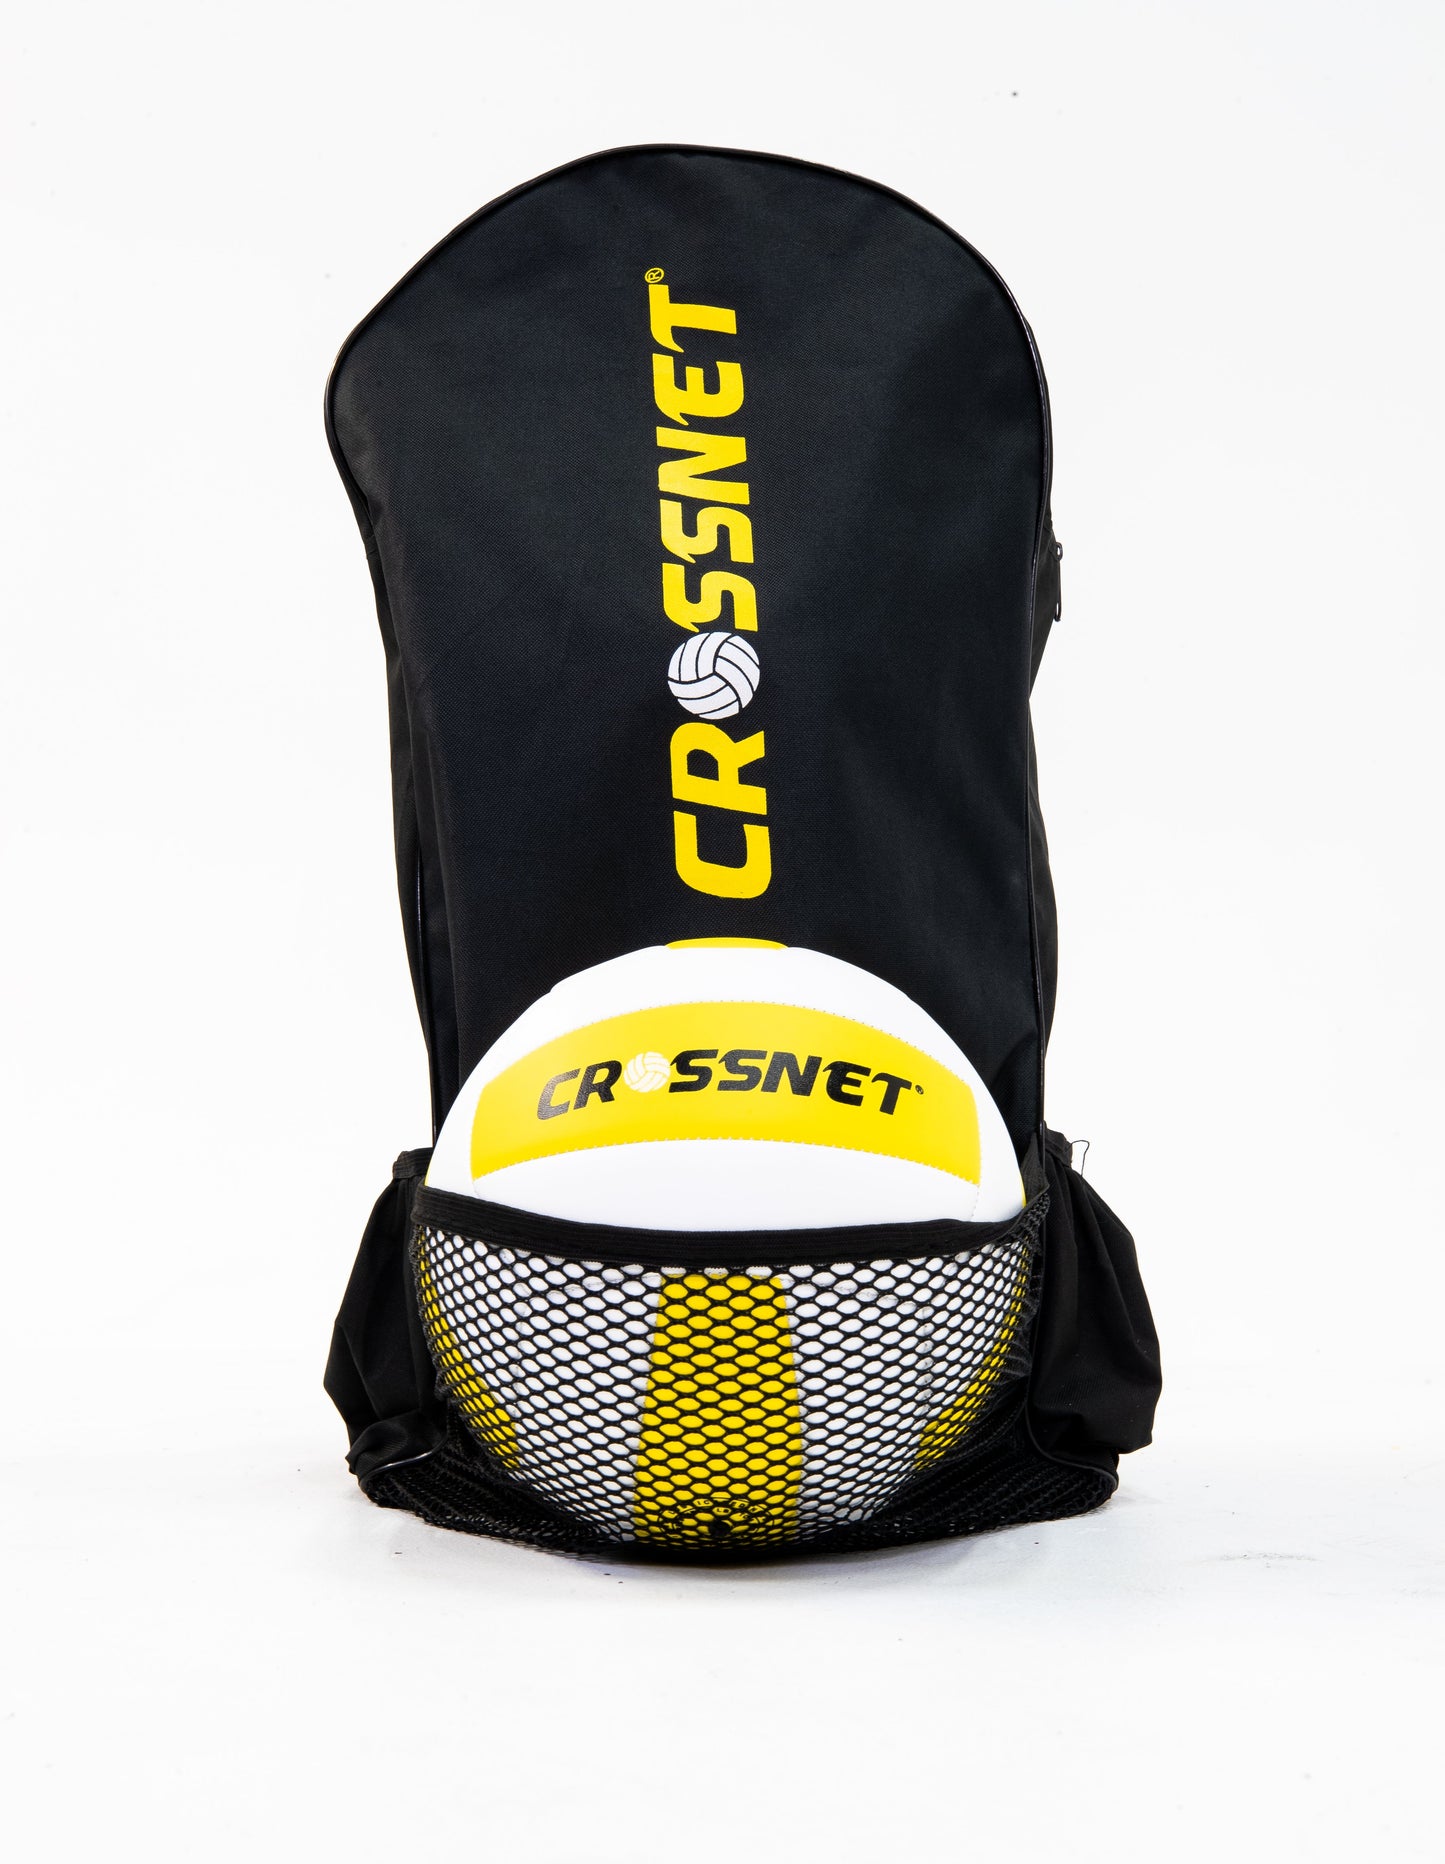 Crossnet Volleyball Set